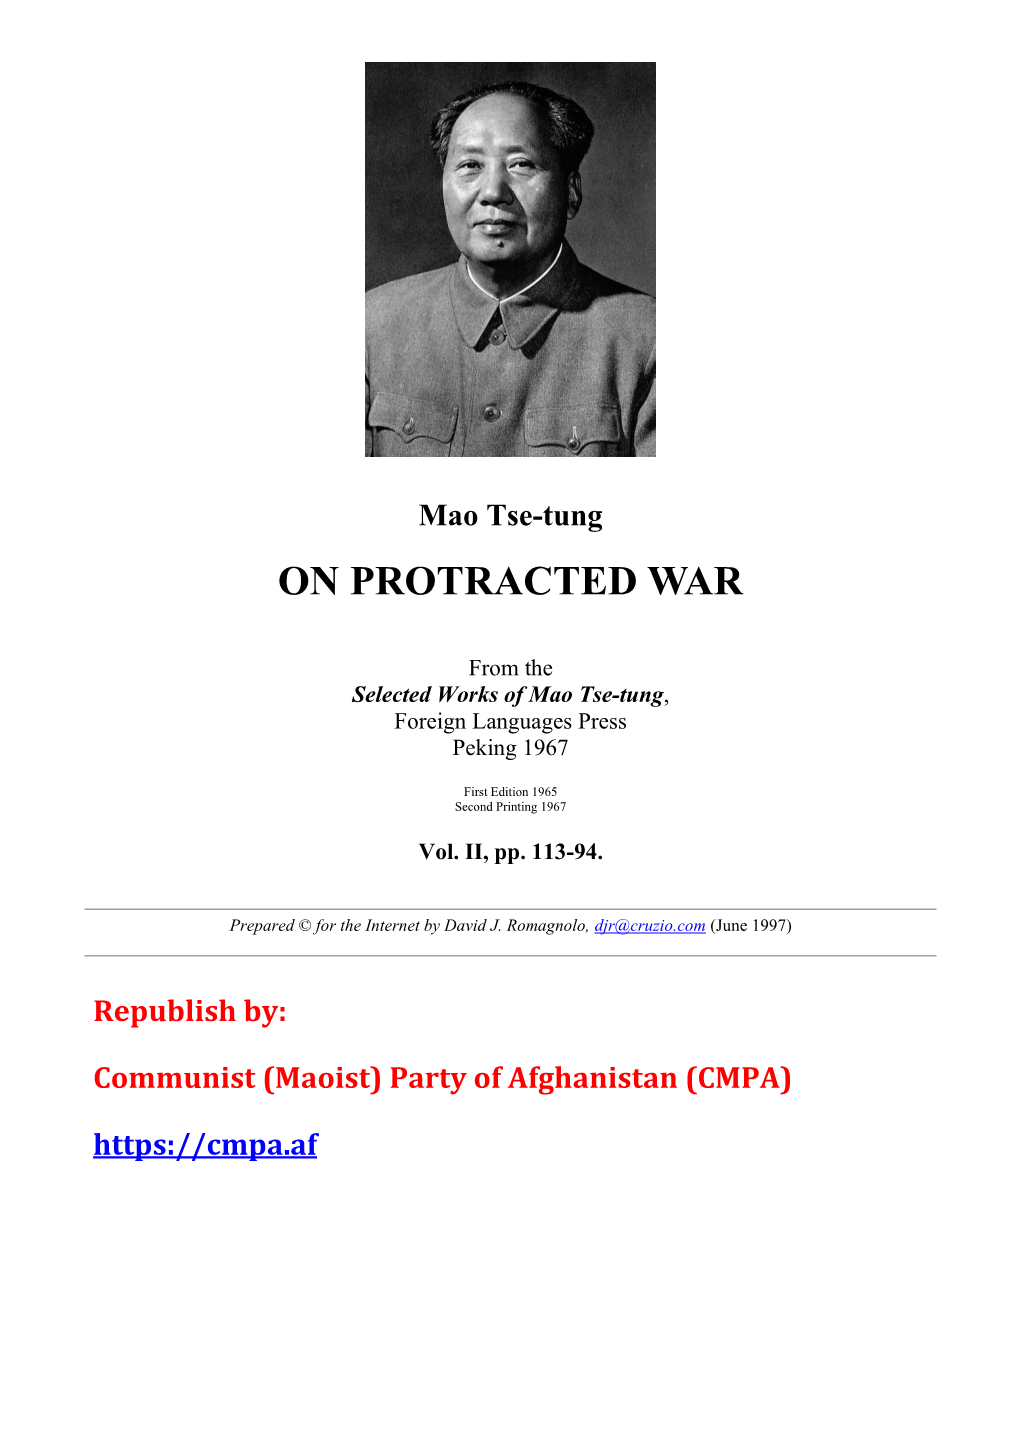 Mao Tse-Tung on PROTRACTED WAR